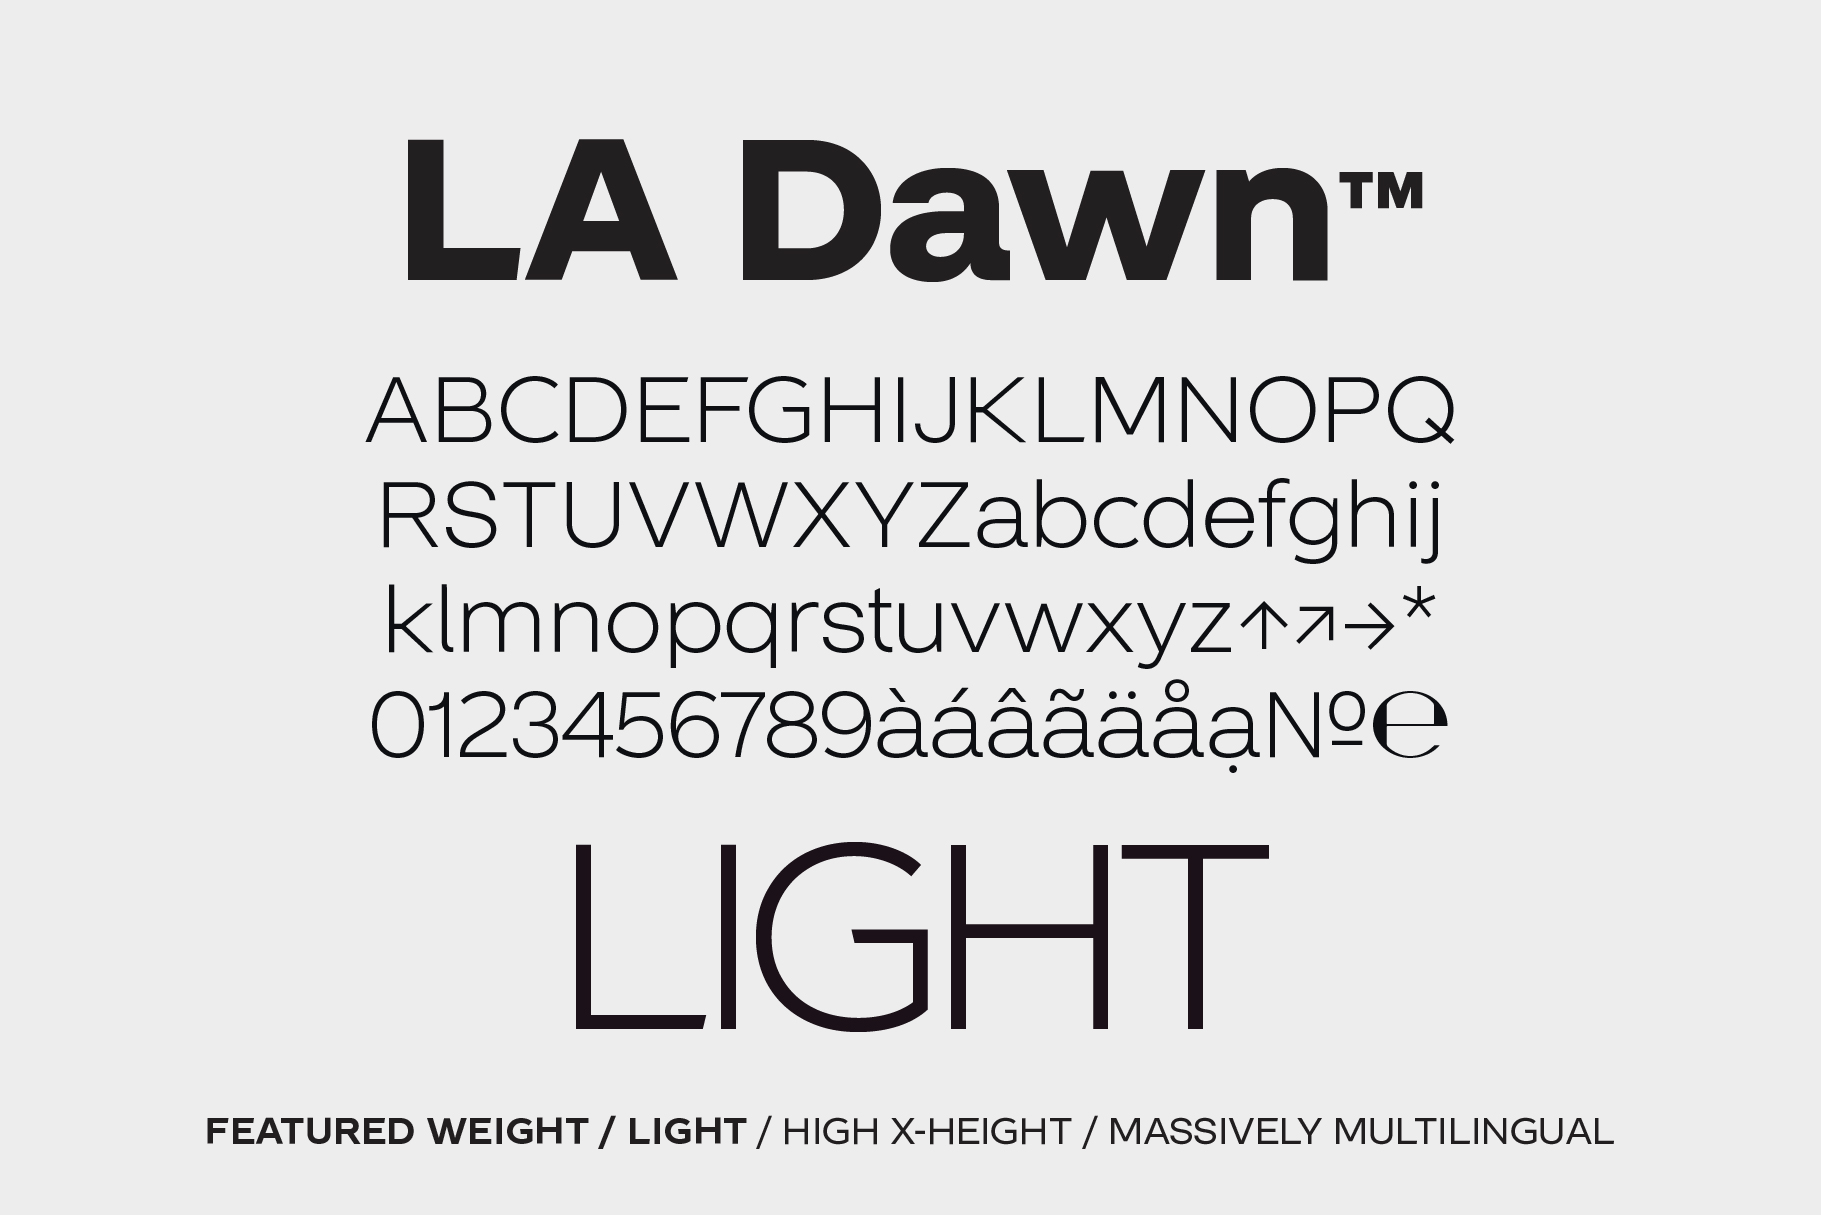 LA Dawn Light